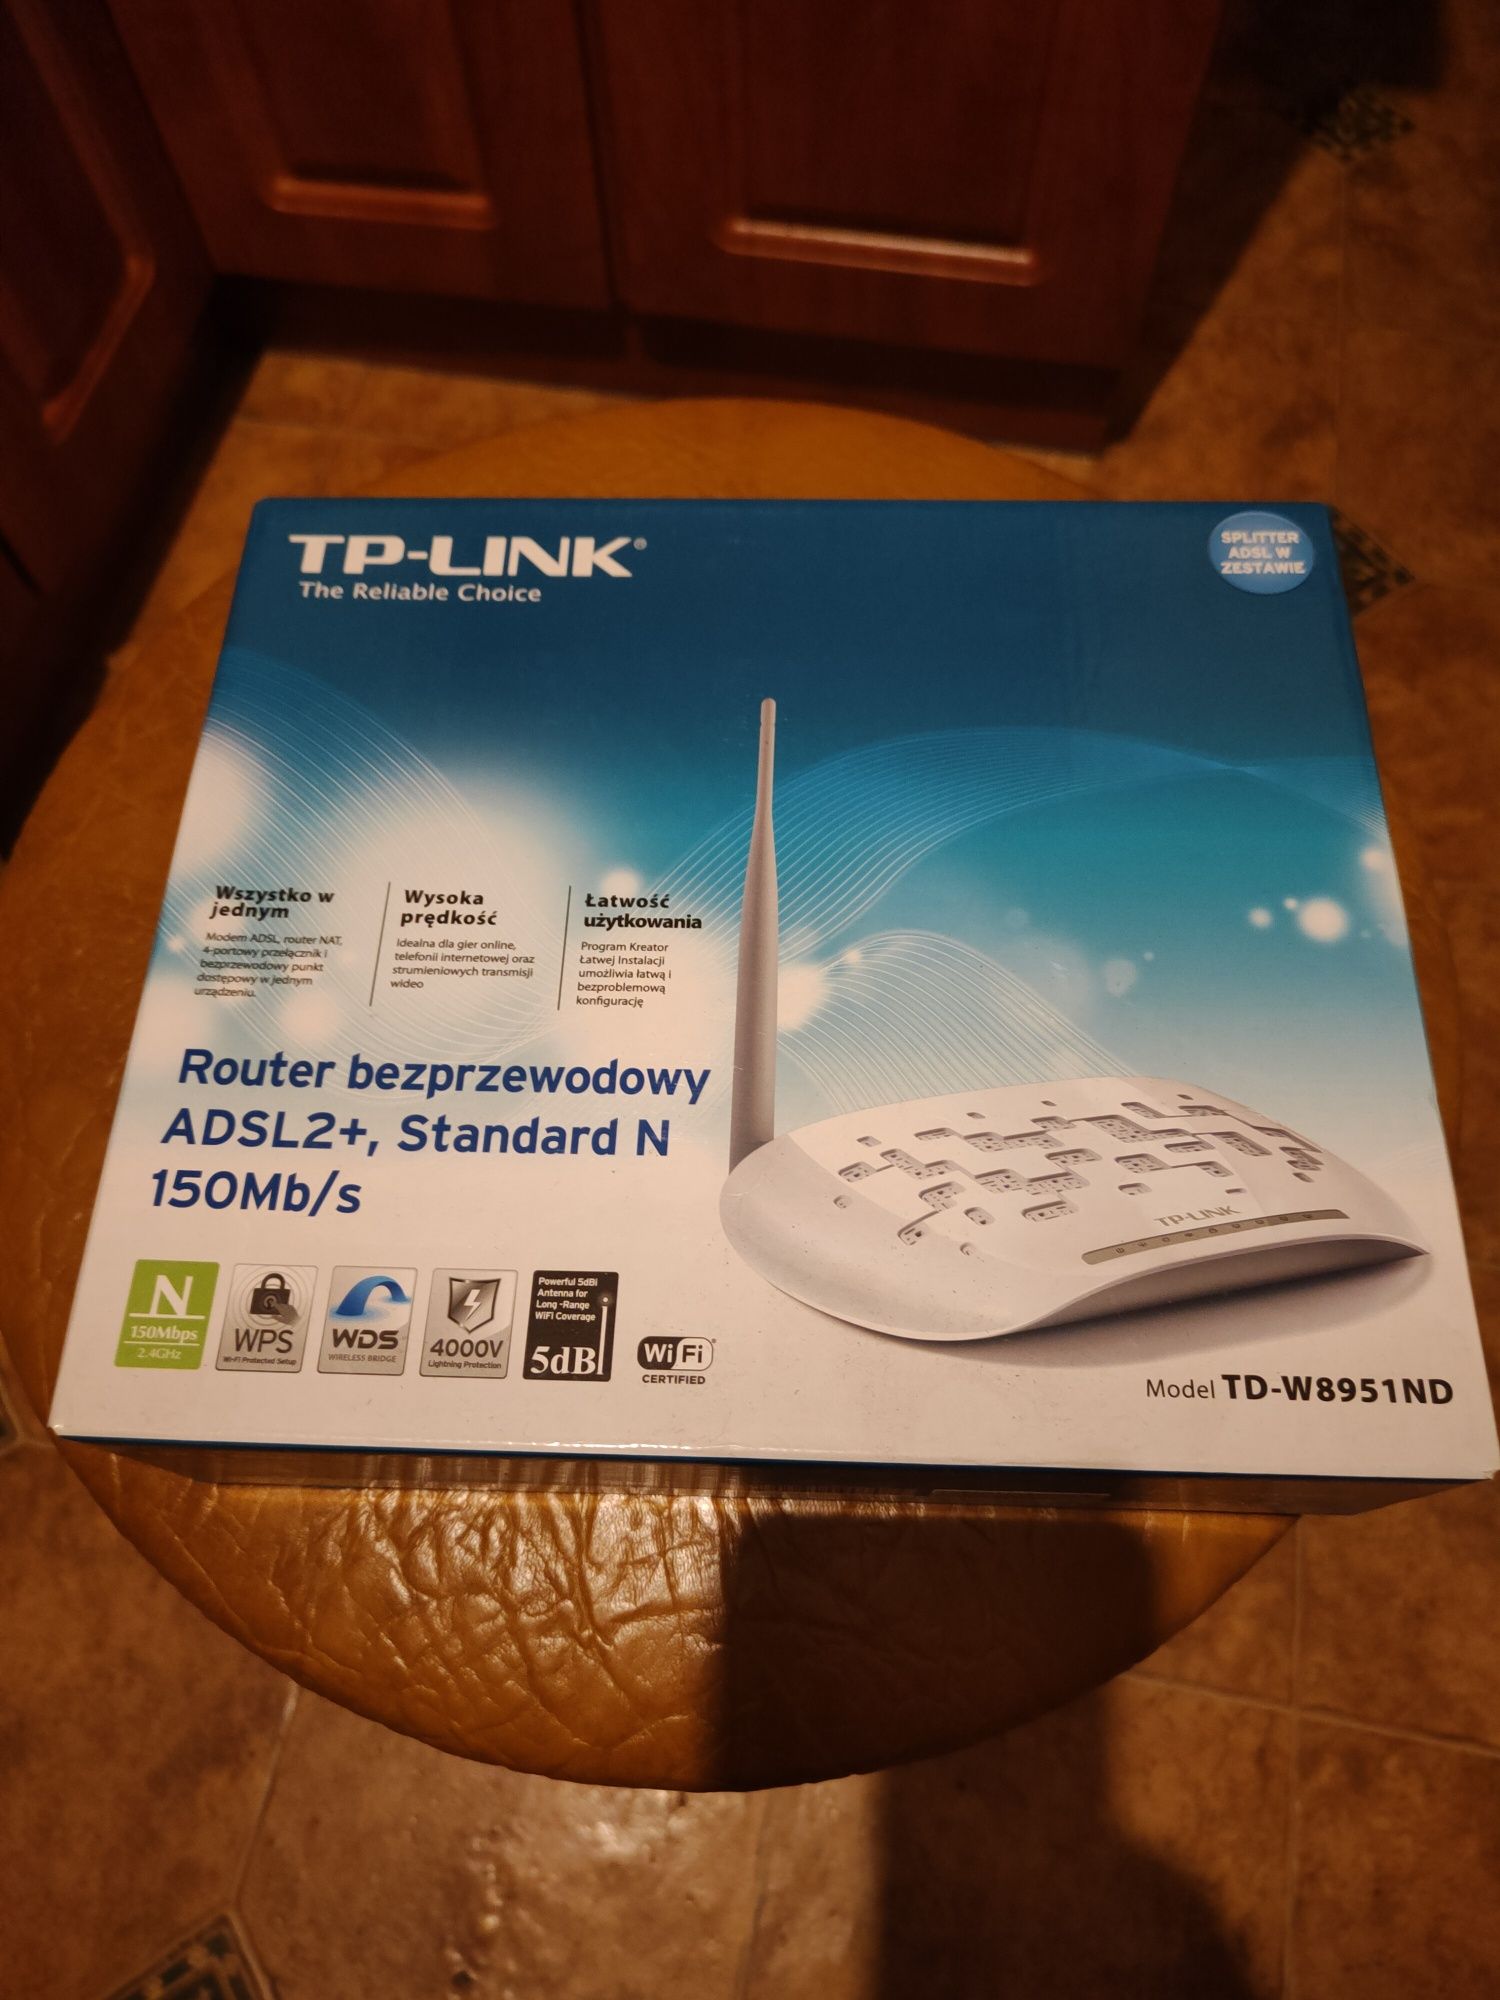 Router bezprzewodowy ADSL2+, Standard N 150 Mb/s. TP-LINK